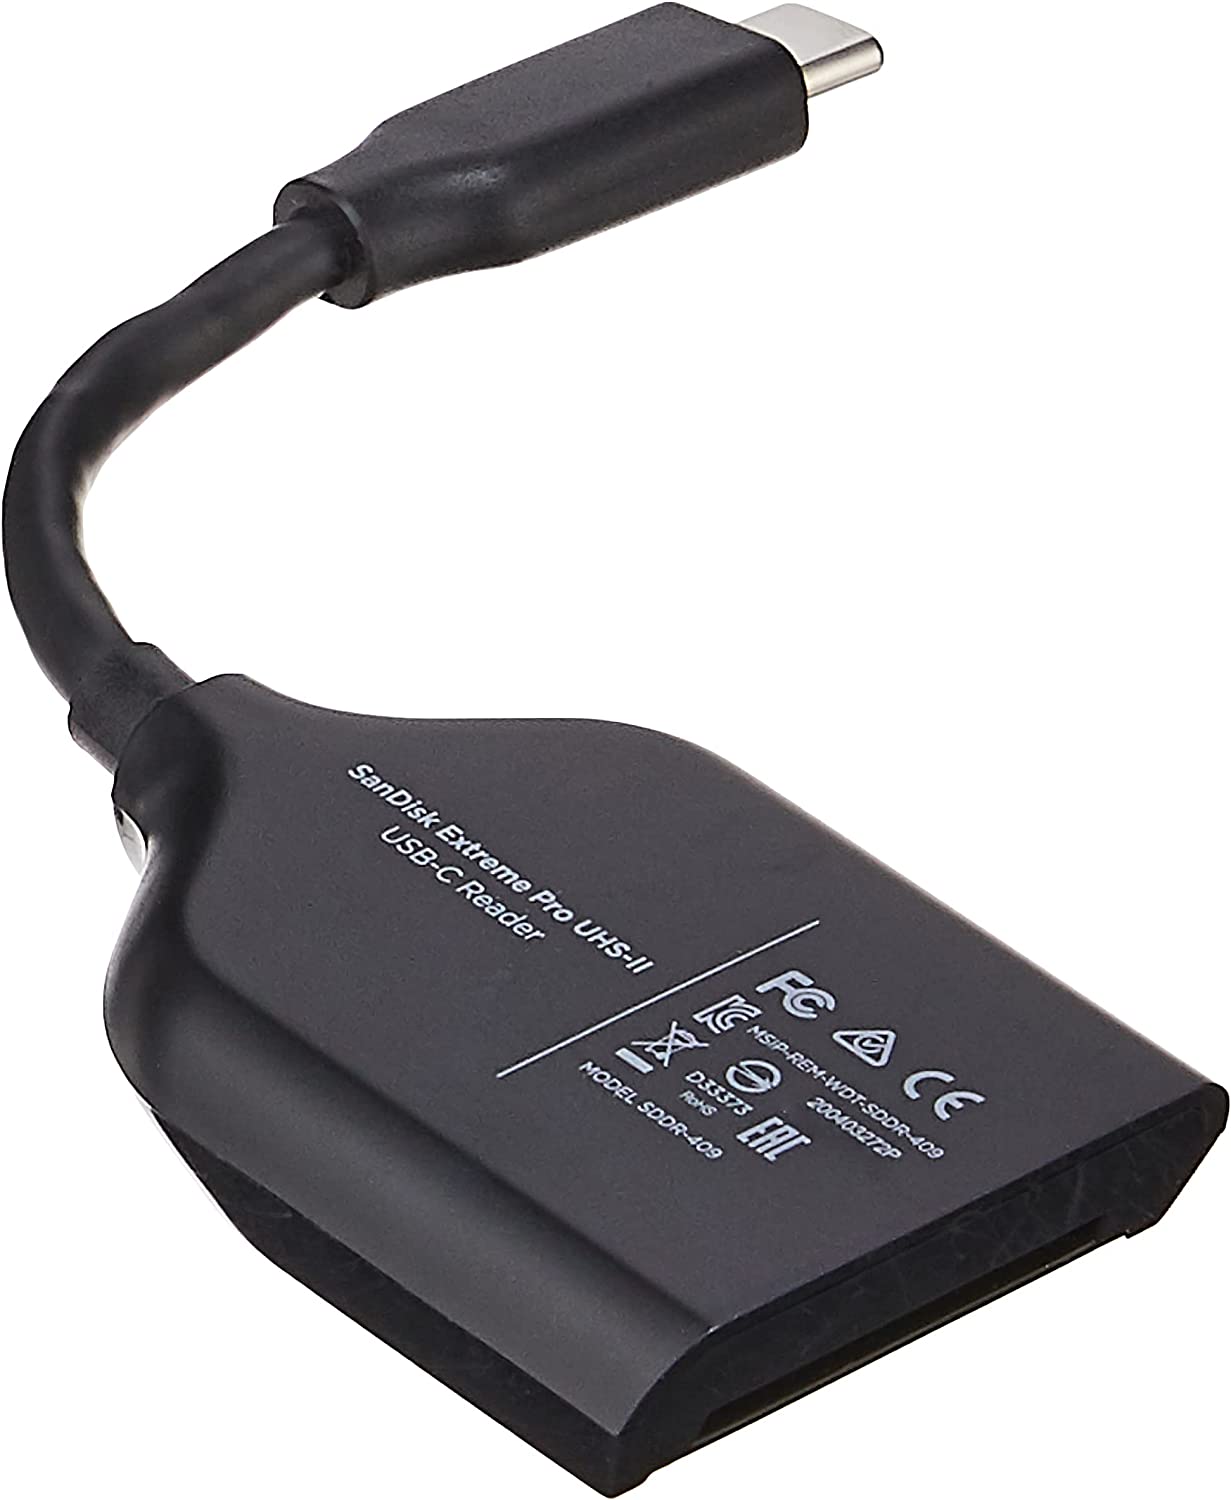 Sandisk Extreme PRO SD UHS-II USB-C Reader/Writer Portable - Veloreo